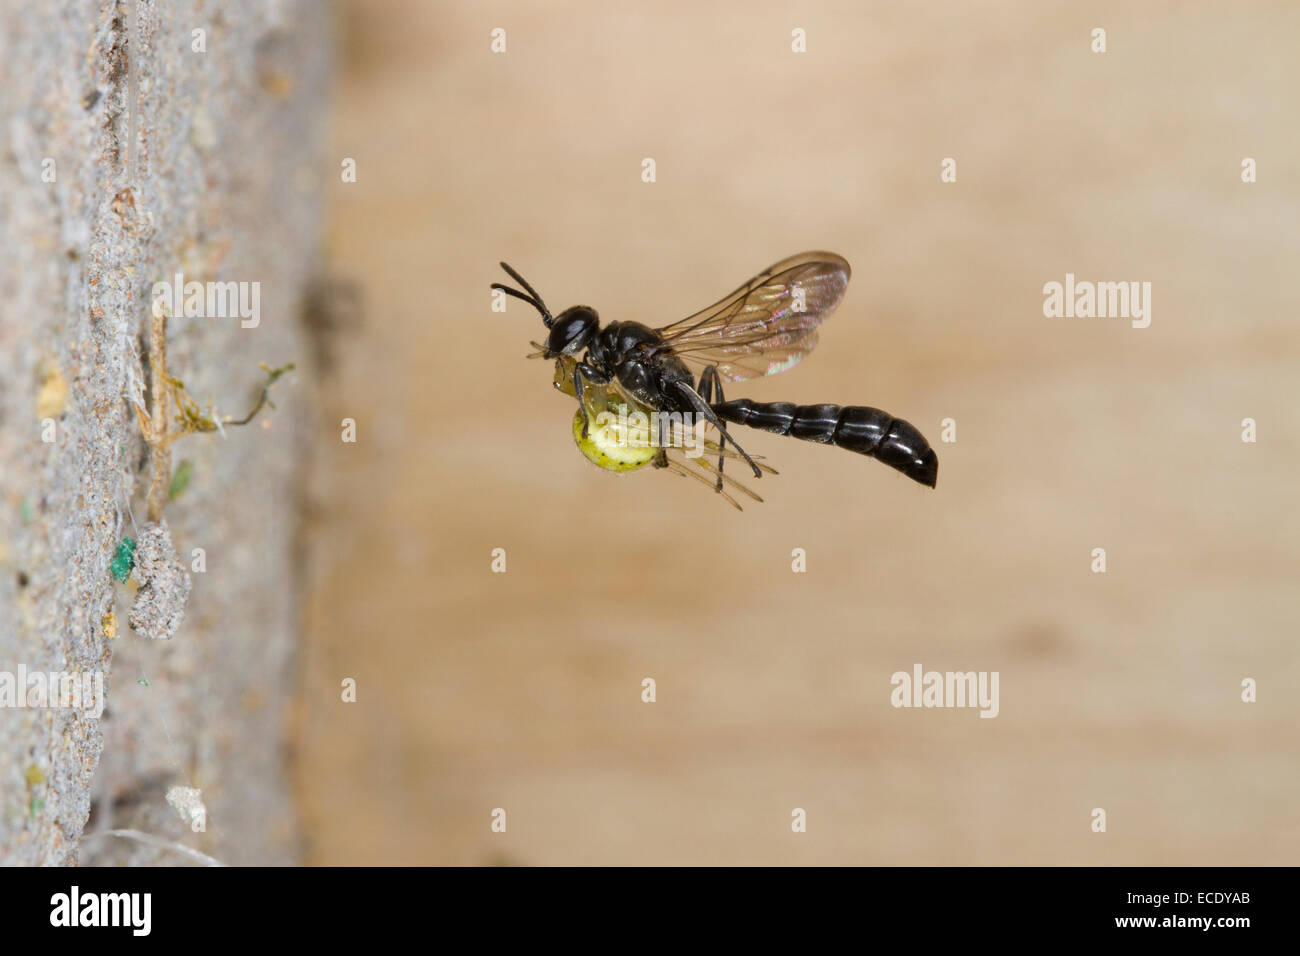 Sonda campionatrice Legno wasp (Trypoxylon sp.) femmina in volo, arrivando a nido con Crab-spider preda . Powys, Galles. Giugno. Foto Stock